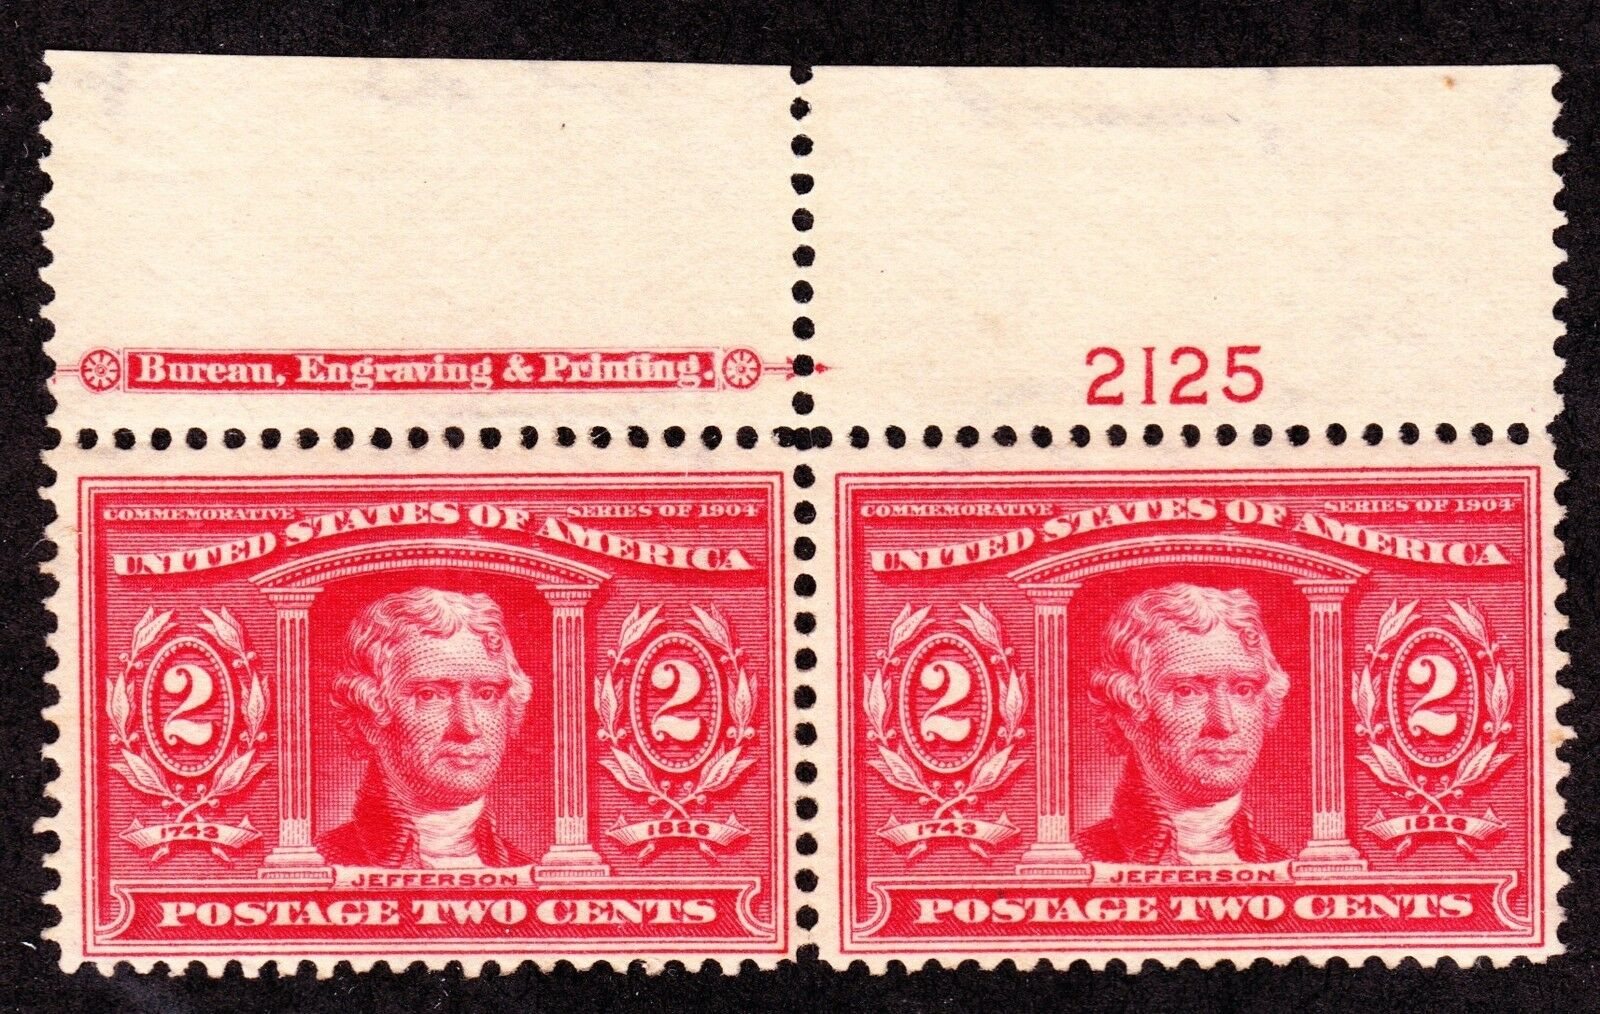 1904 Jefferson Louisiana Purchase Commemorative 2-Cent US Postage